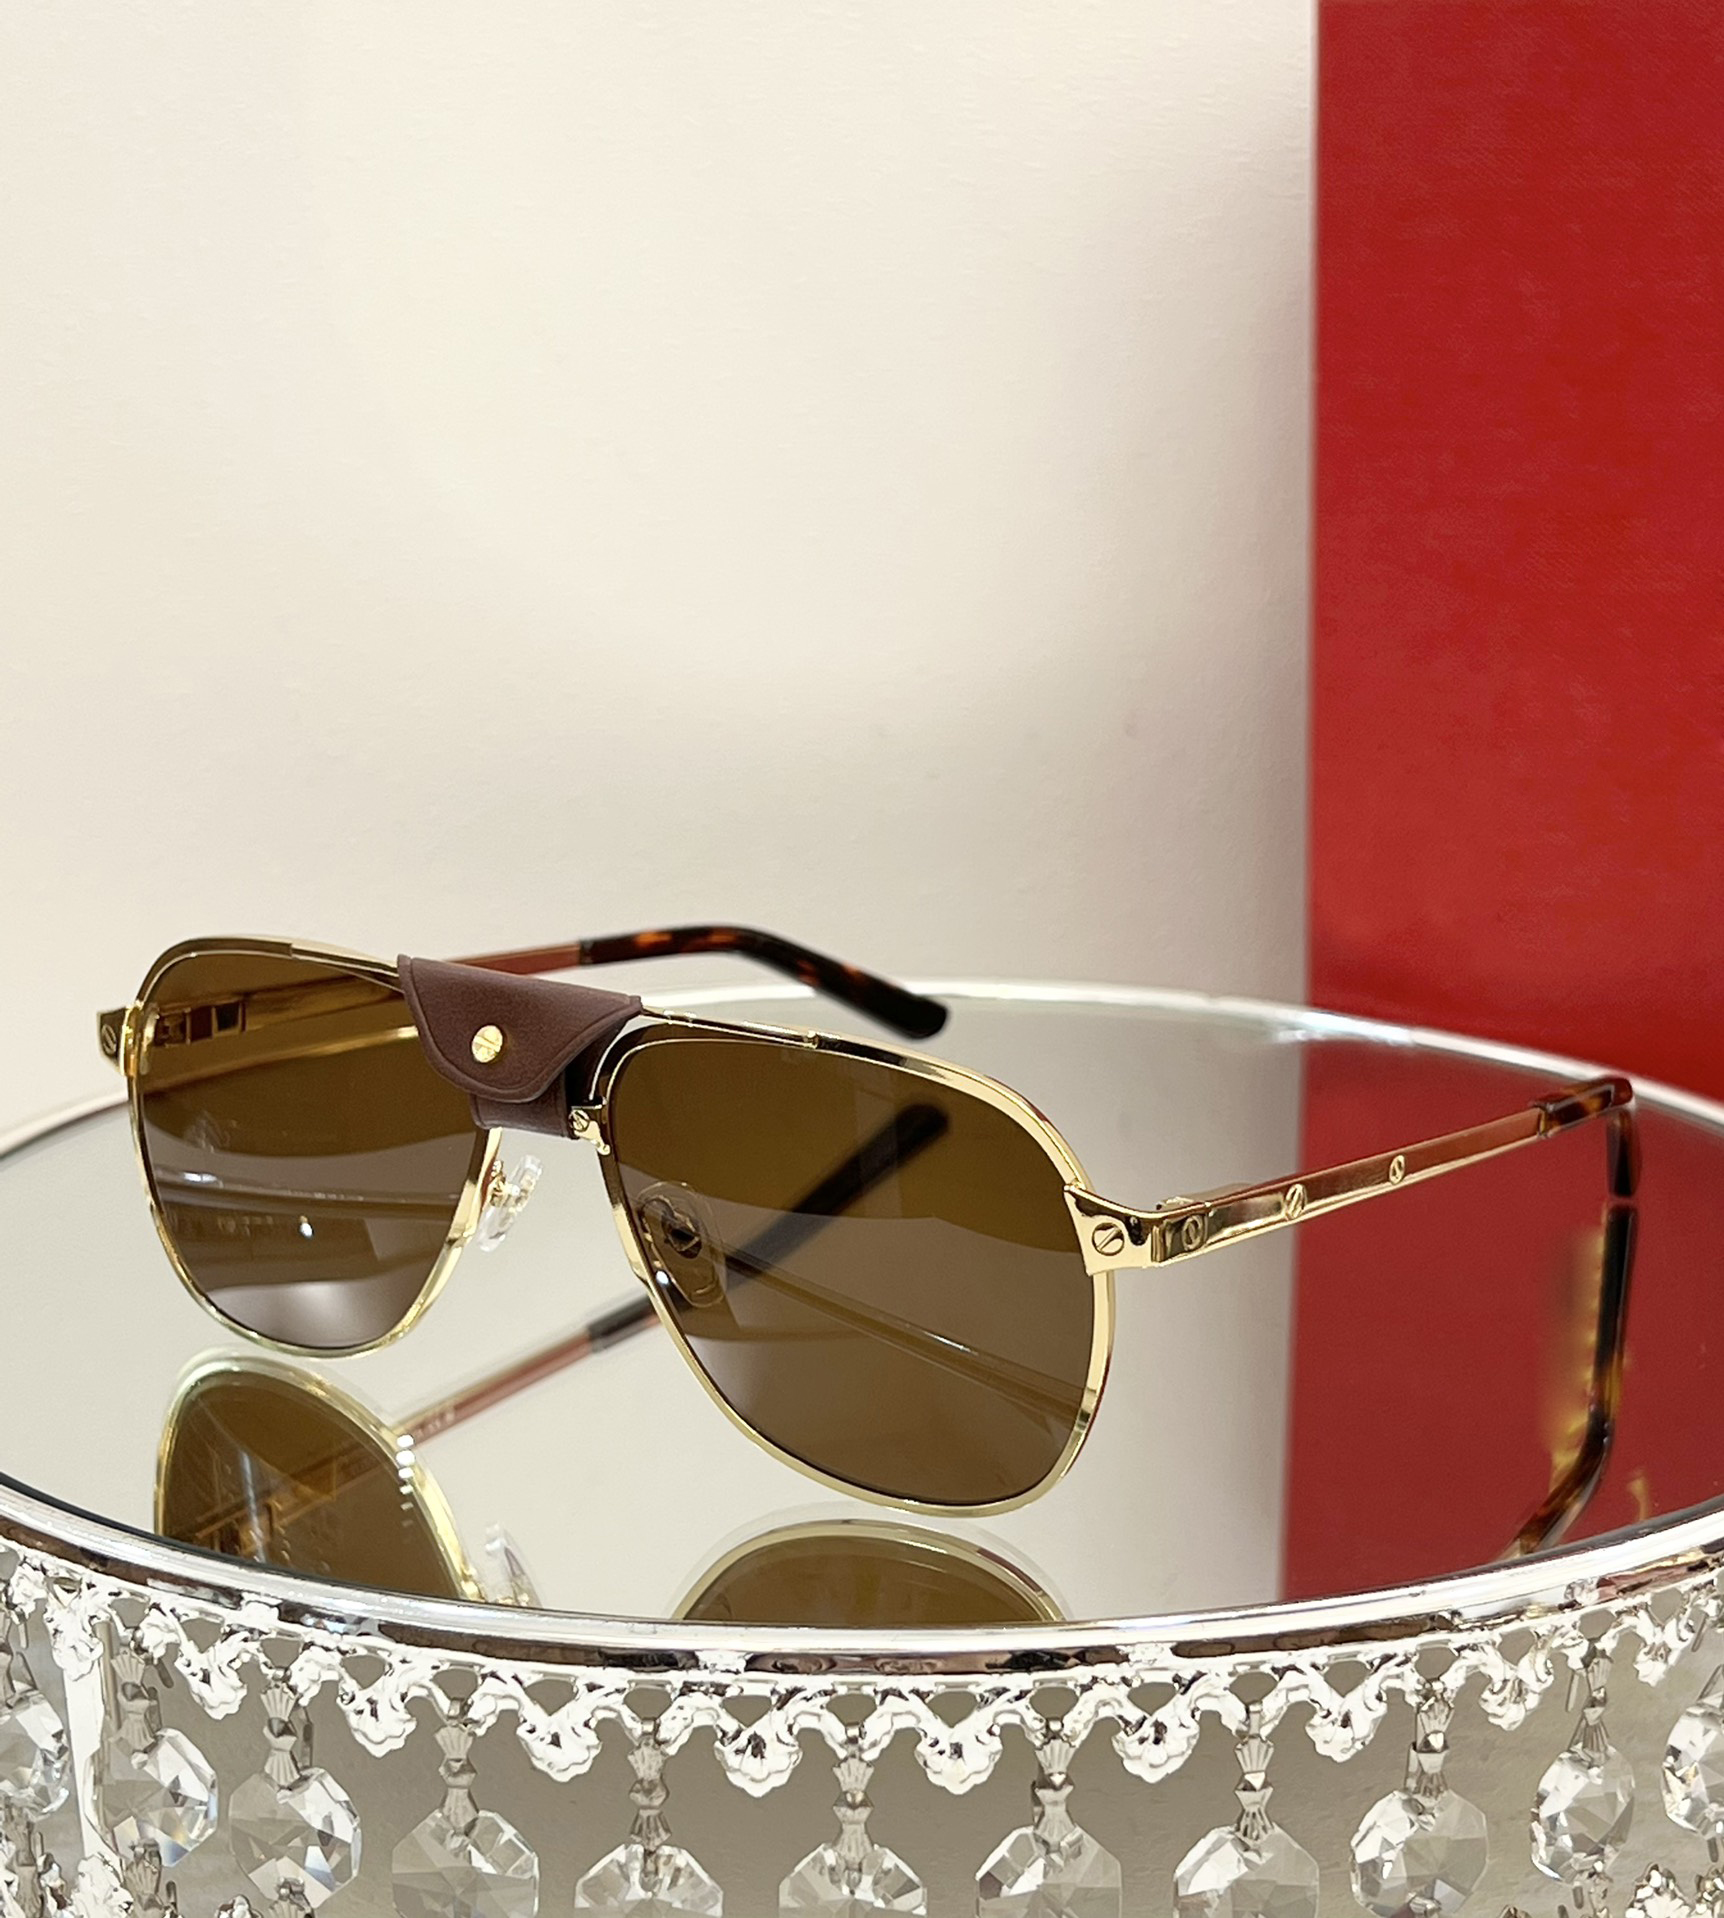 luxury carter lunettes designer sunglasses men women 0165 square metal popular frame uv400 retro eyewear fashion trendy sun glasses original quality come with case